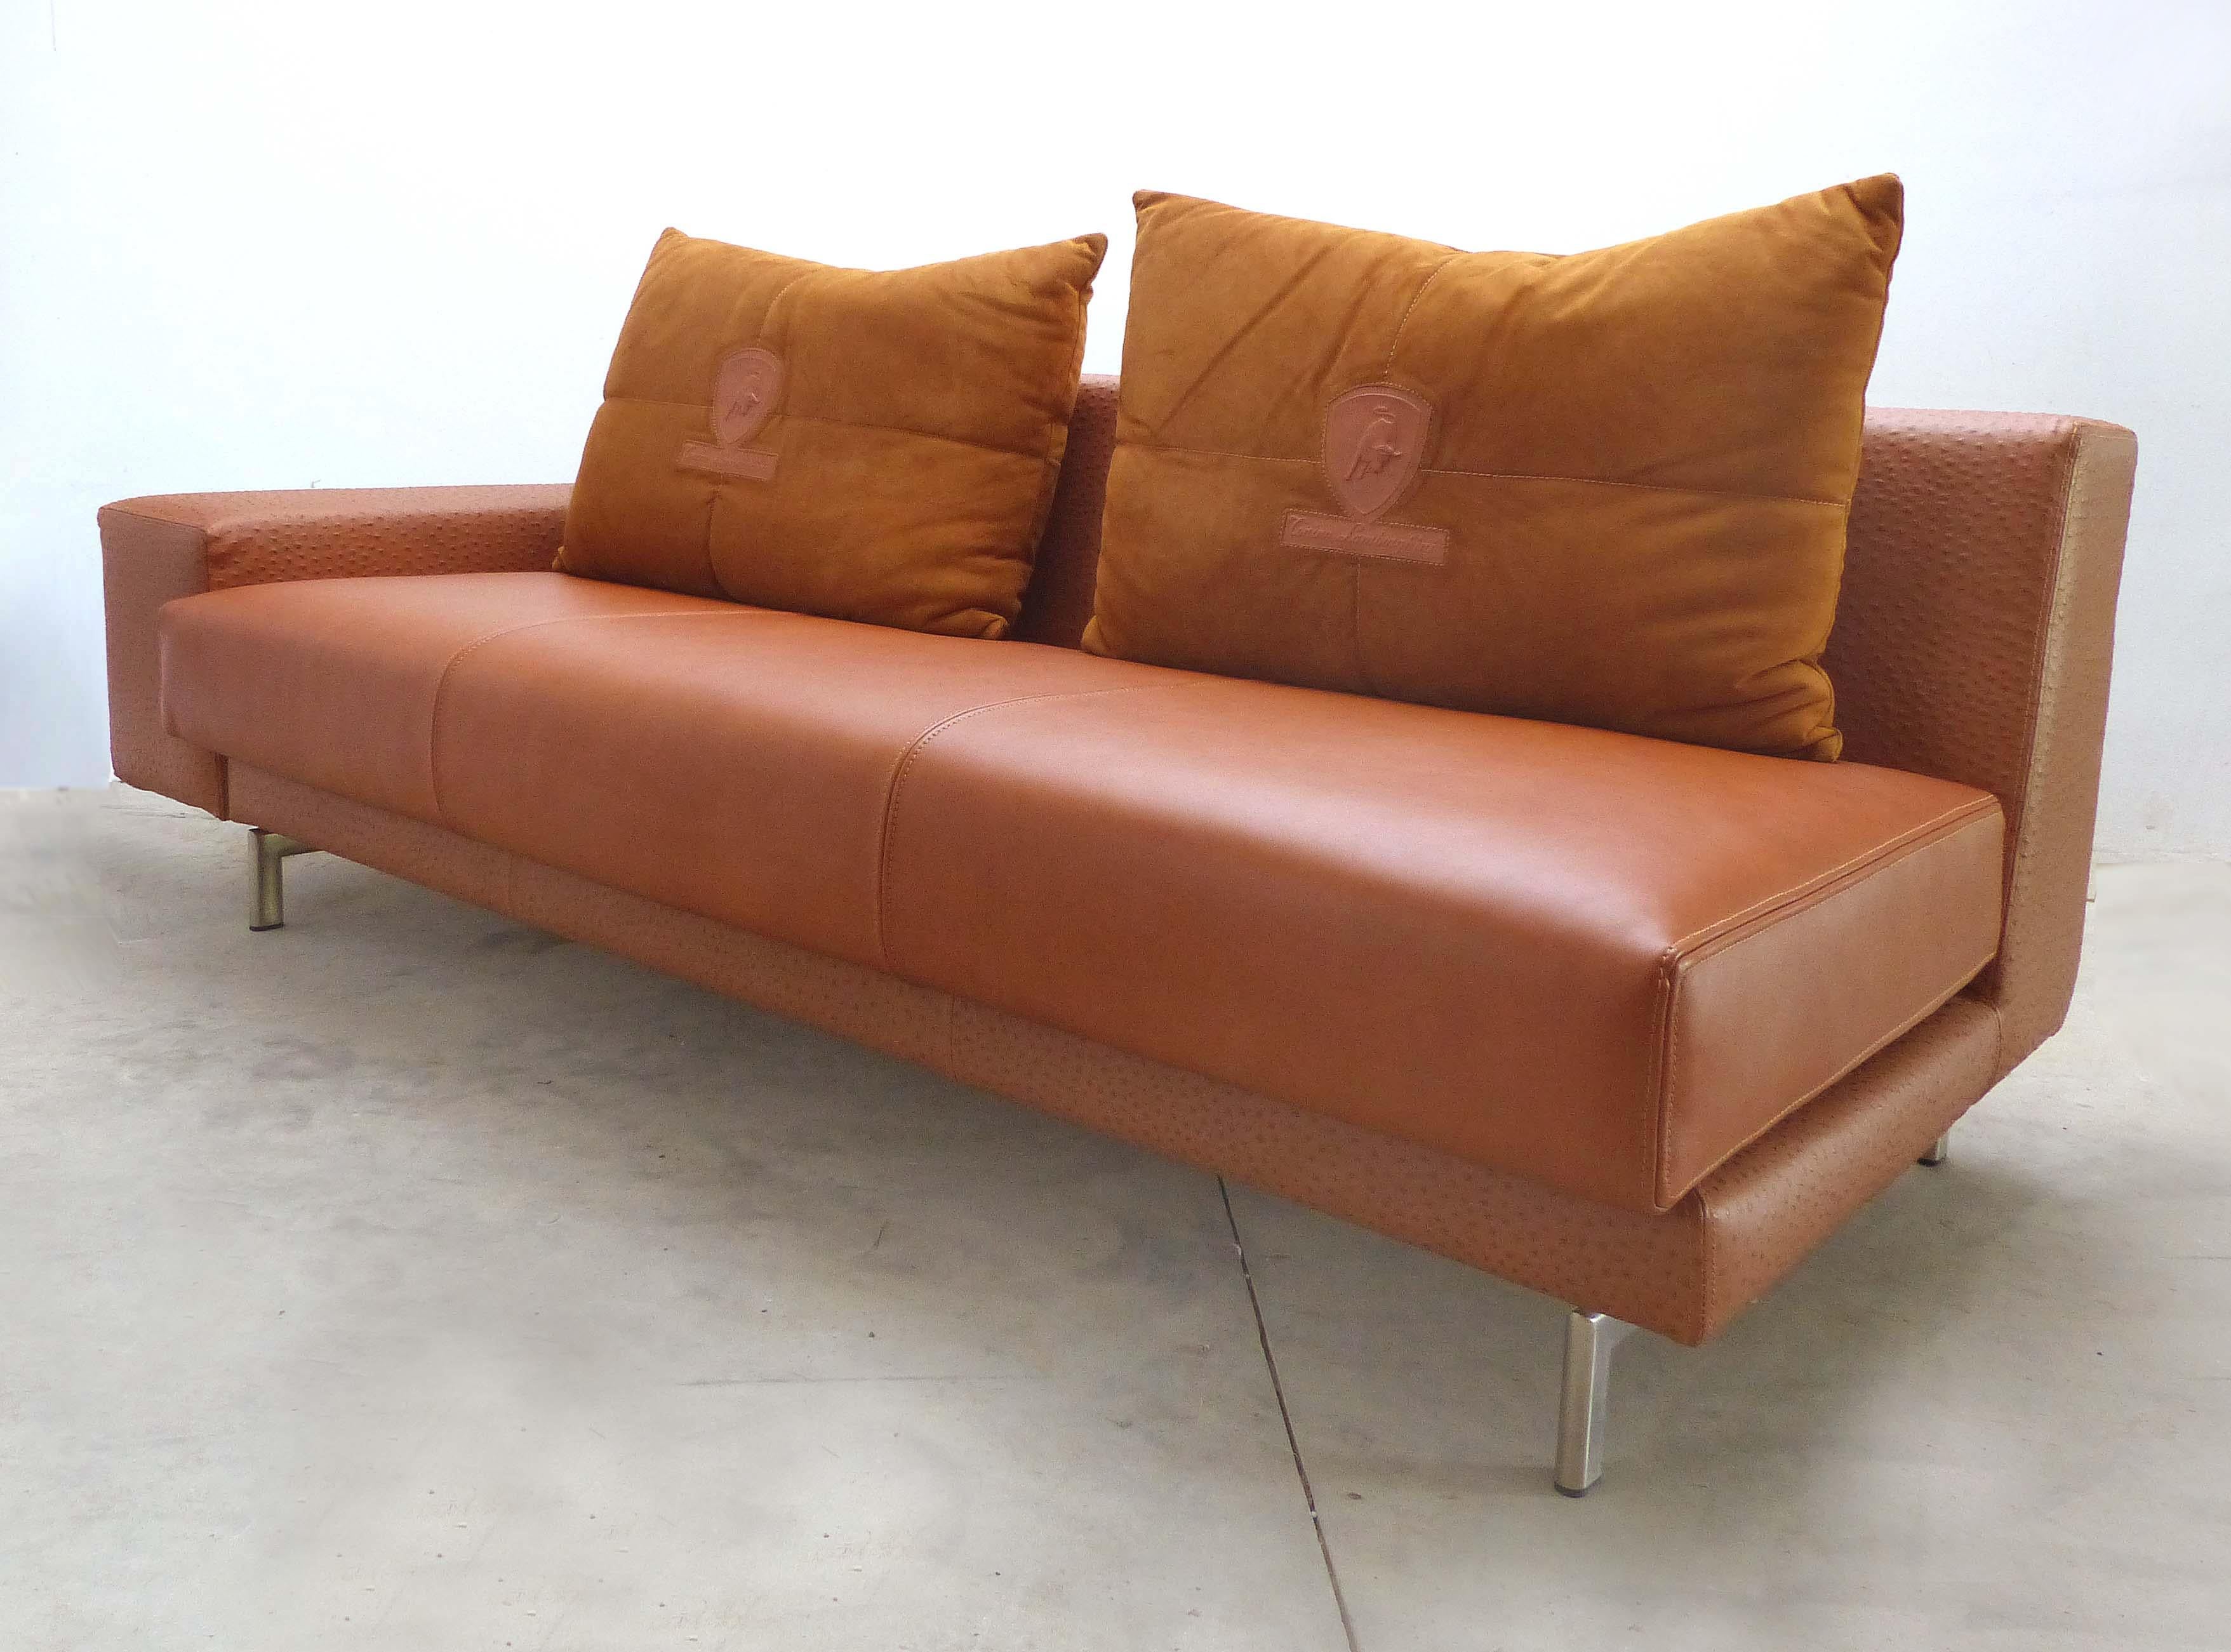 Casa Tonino Lamborghini Pilot Collection Sofa in Leather, Ostrich and Suede 1